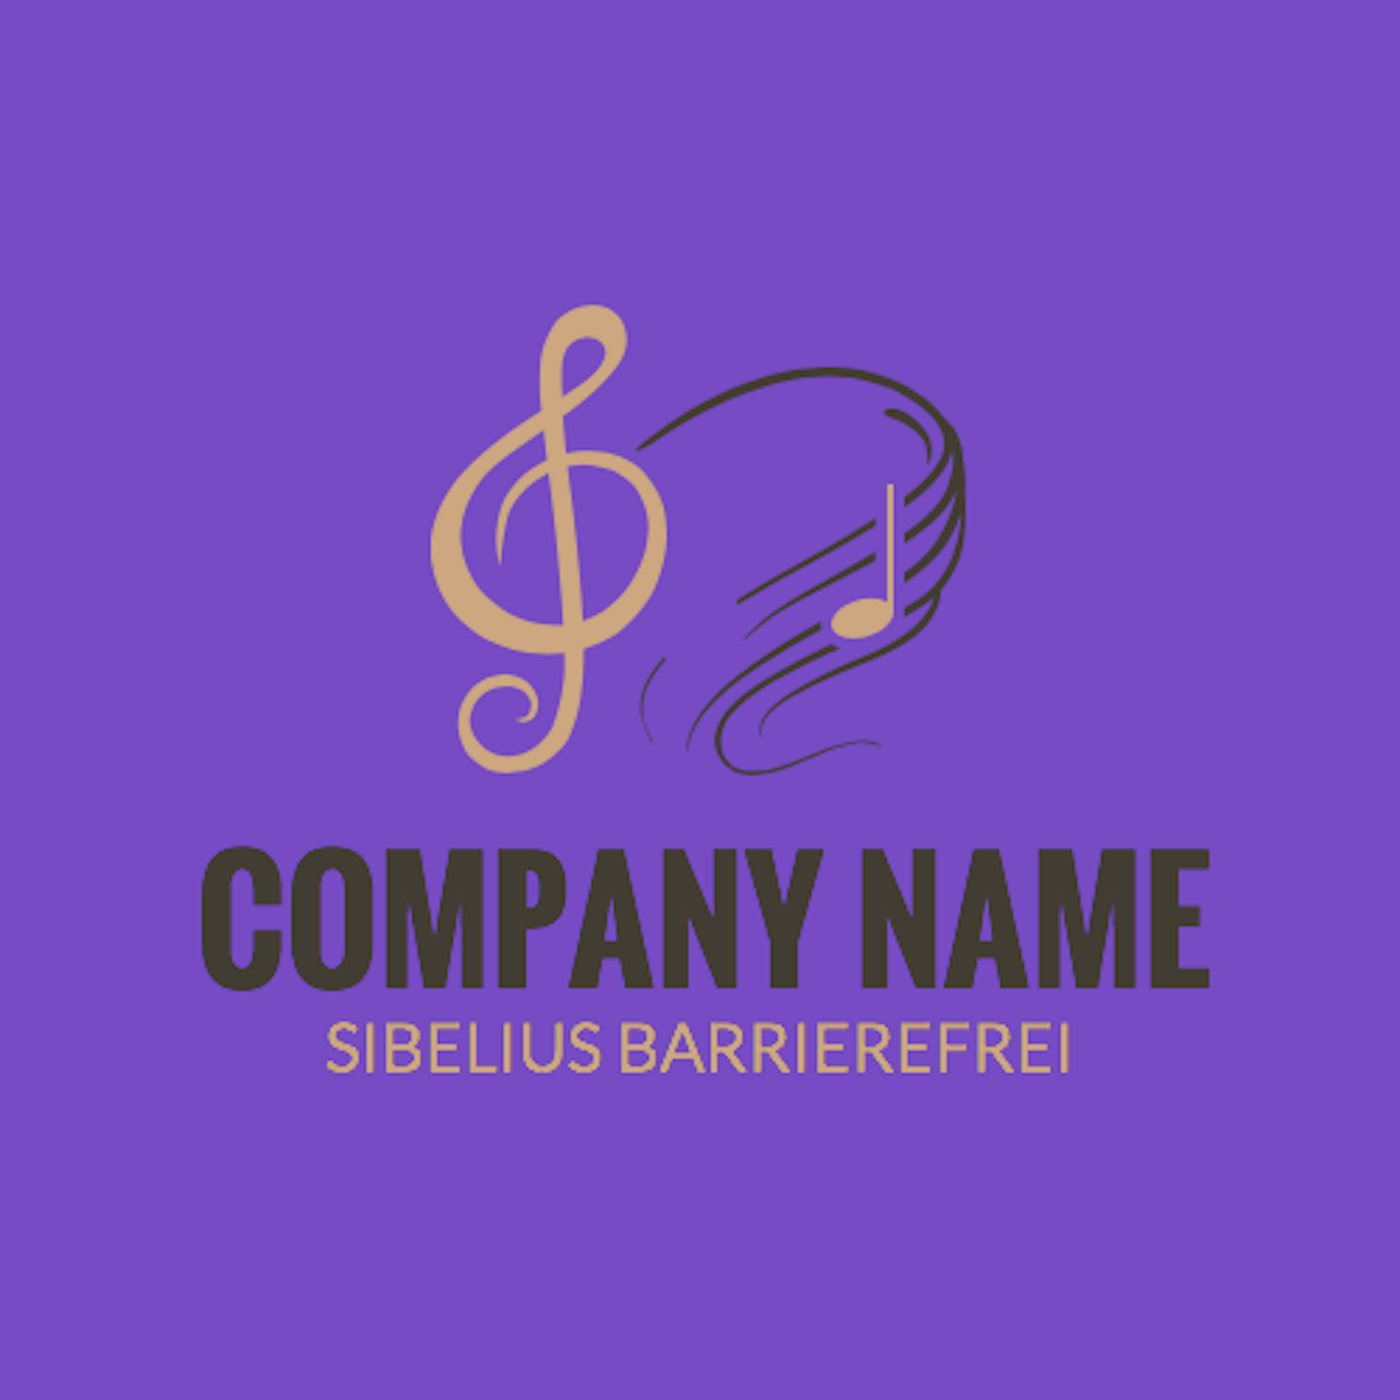 Sibelius barrierefrei